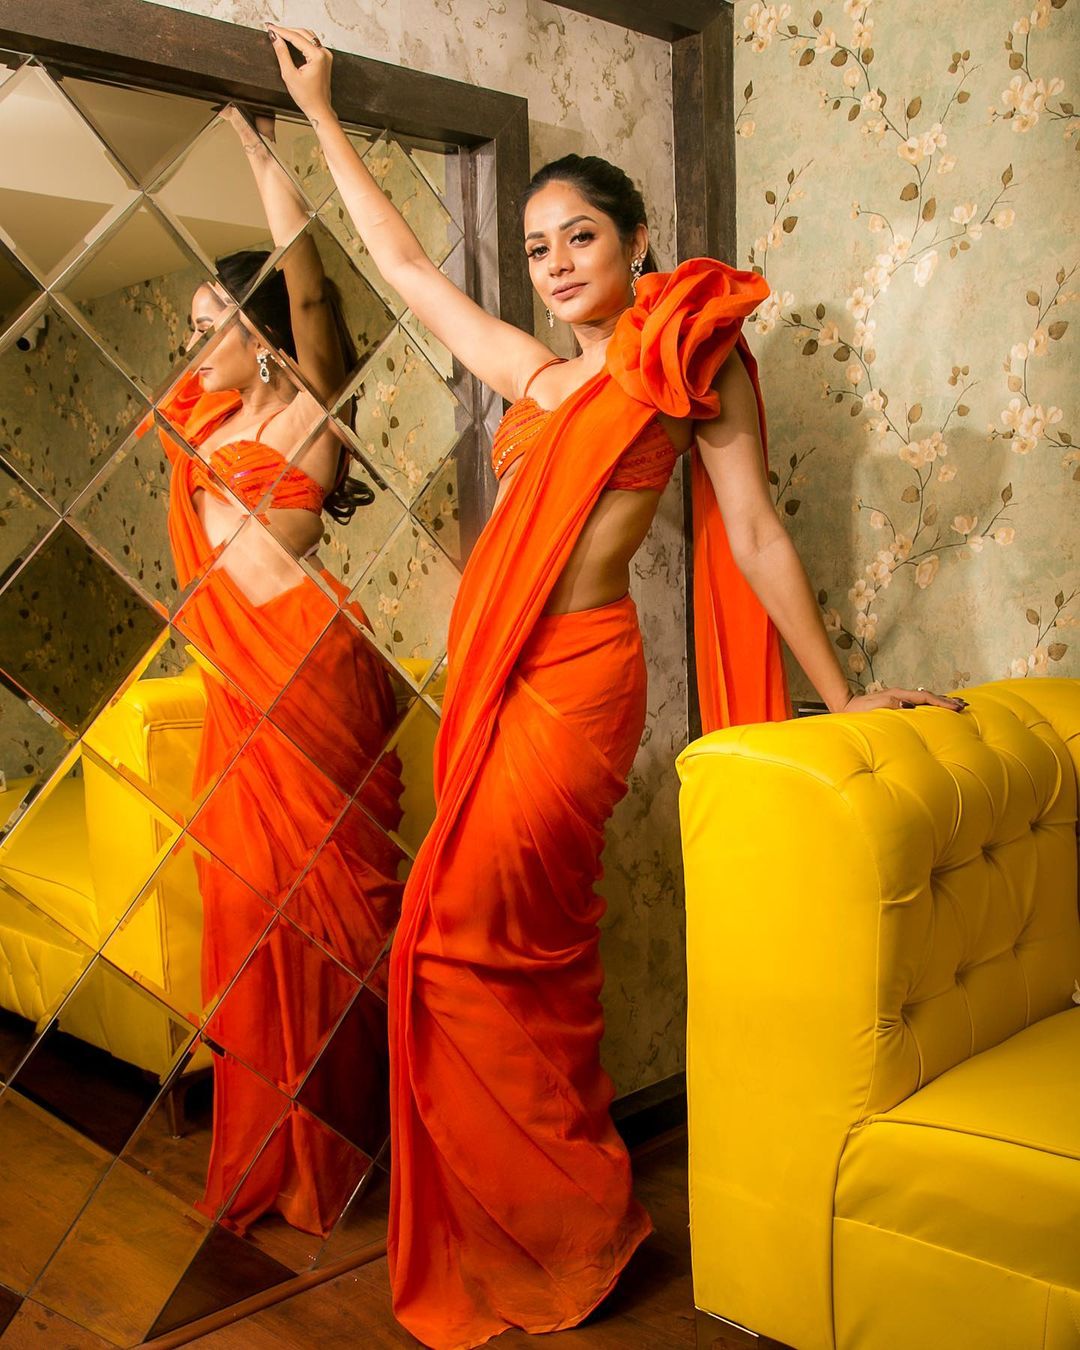 aiswarya dutta hot photos in orange colour dress getting viral